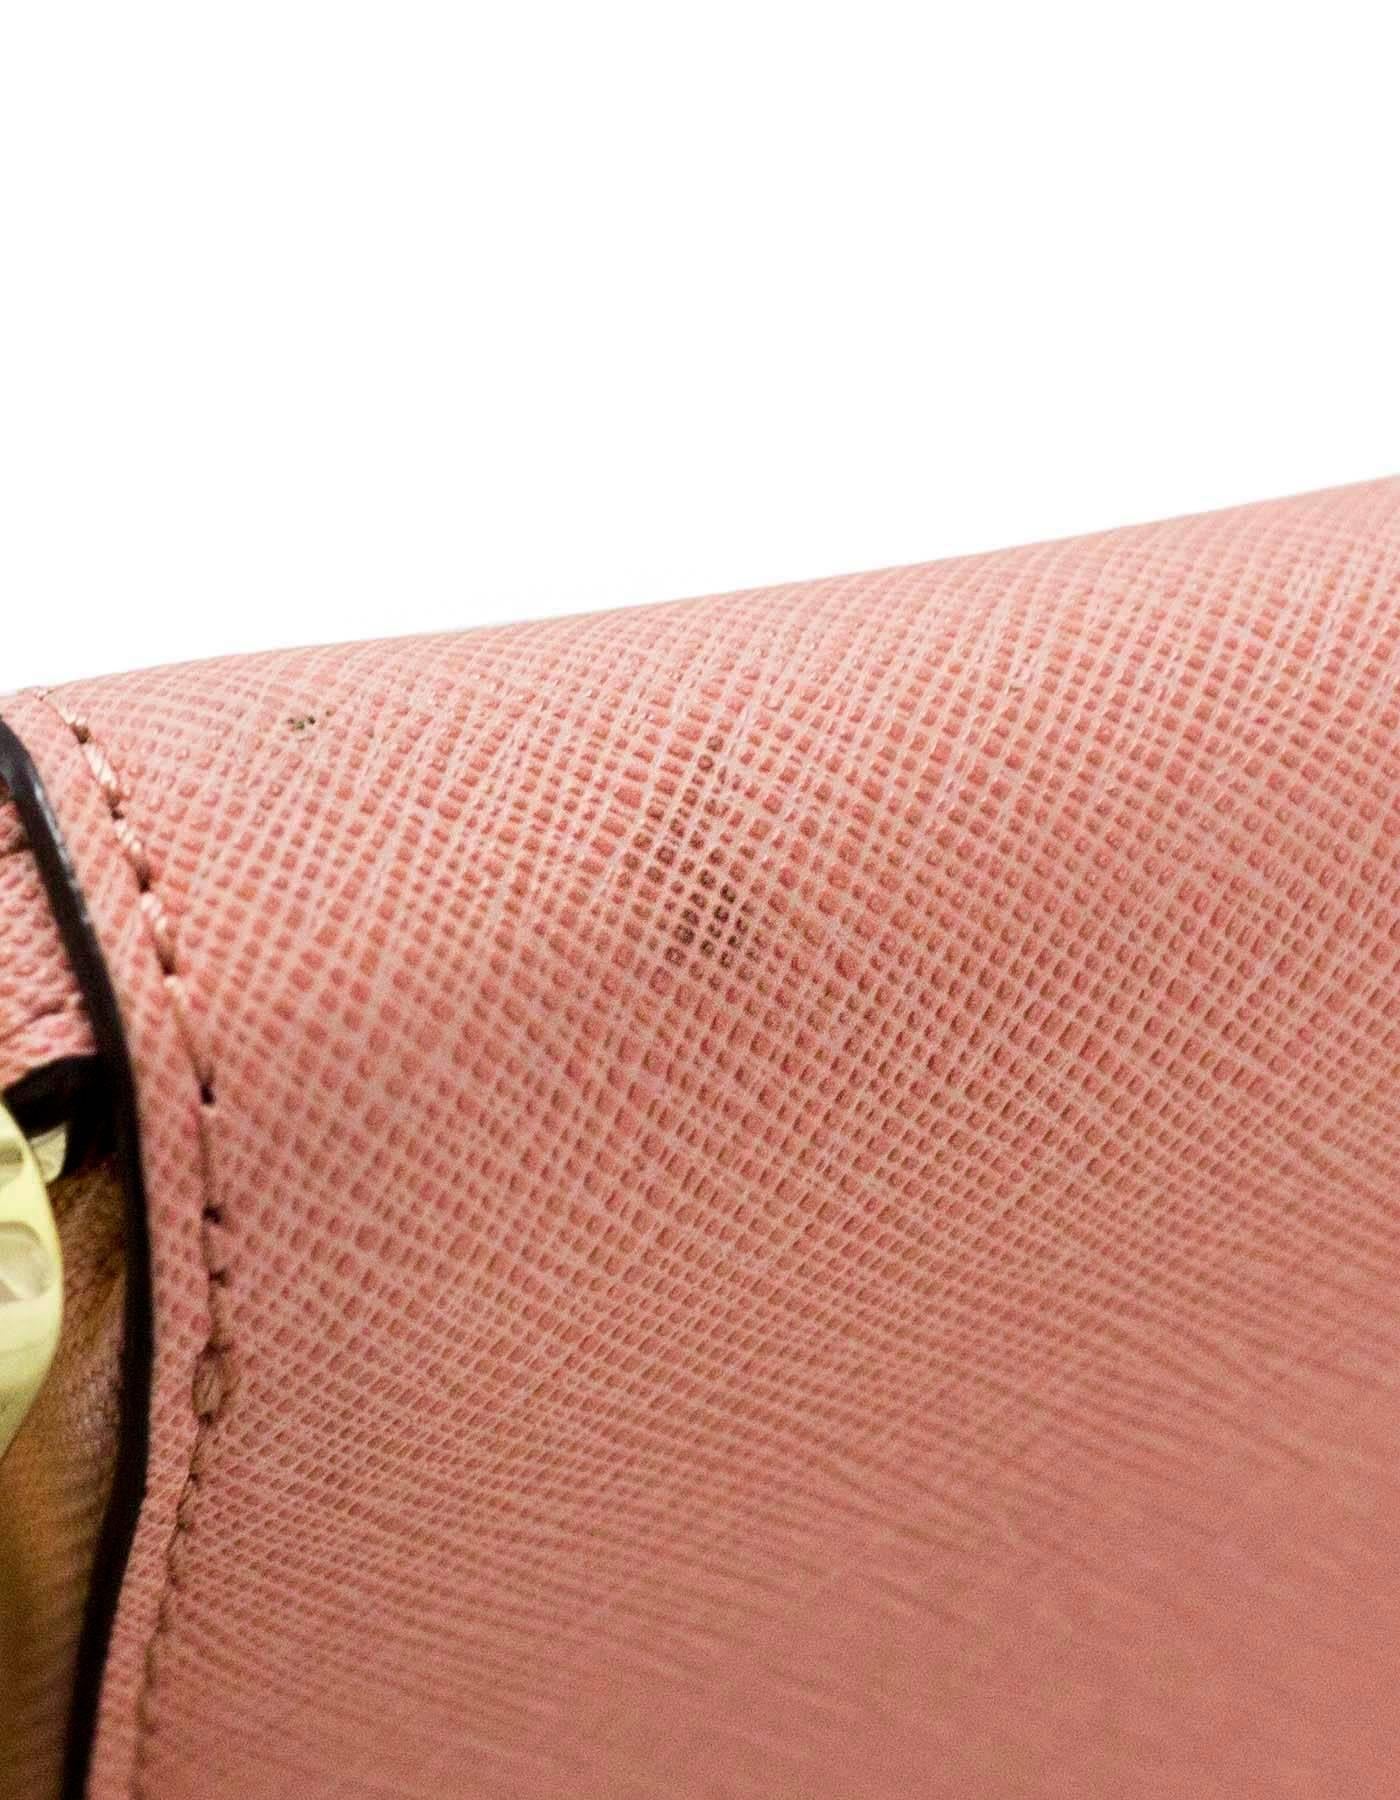 Michael Kors Pink Zippy Wallet/Wristlet 1